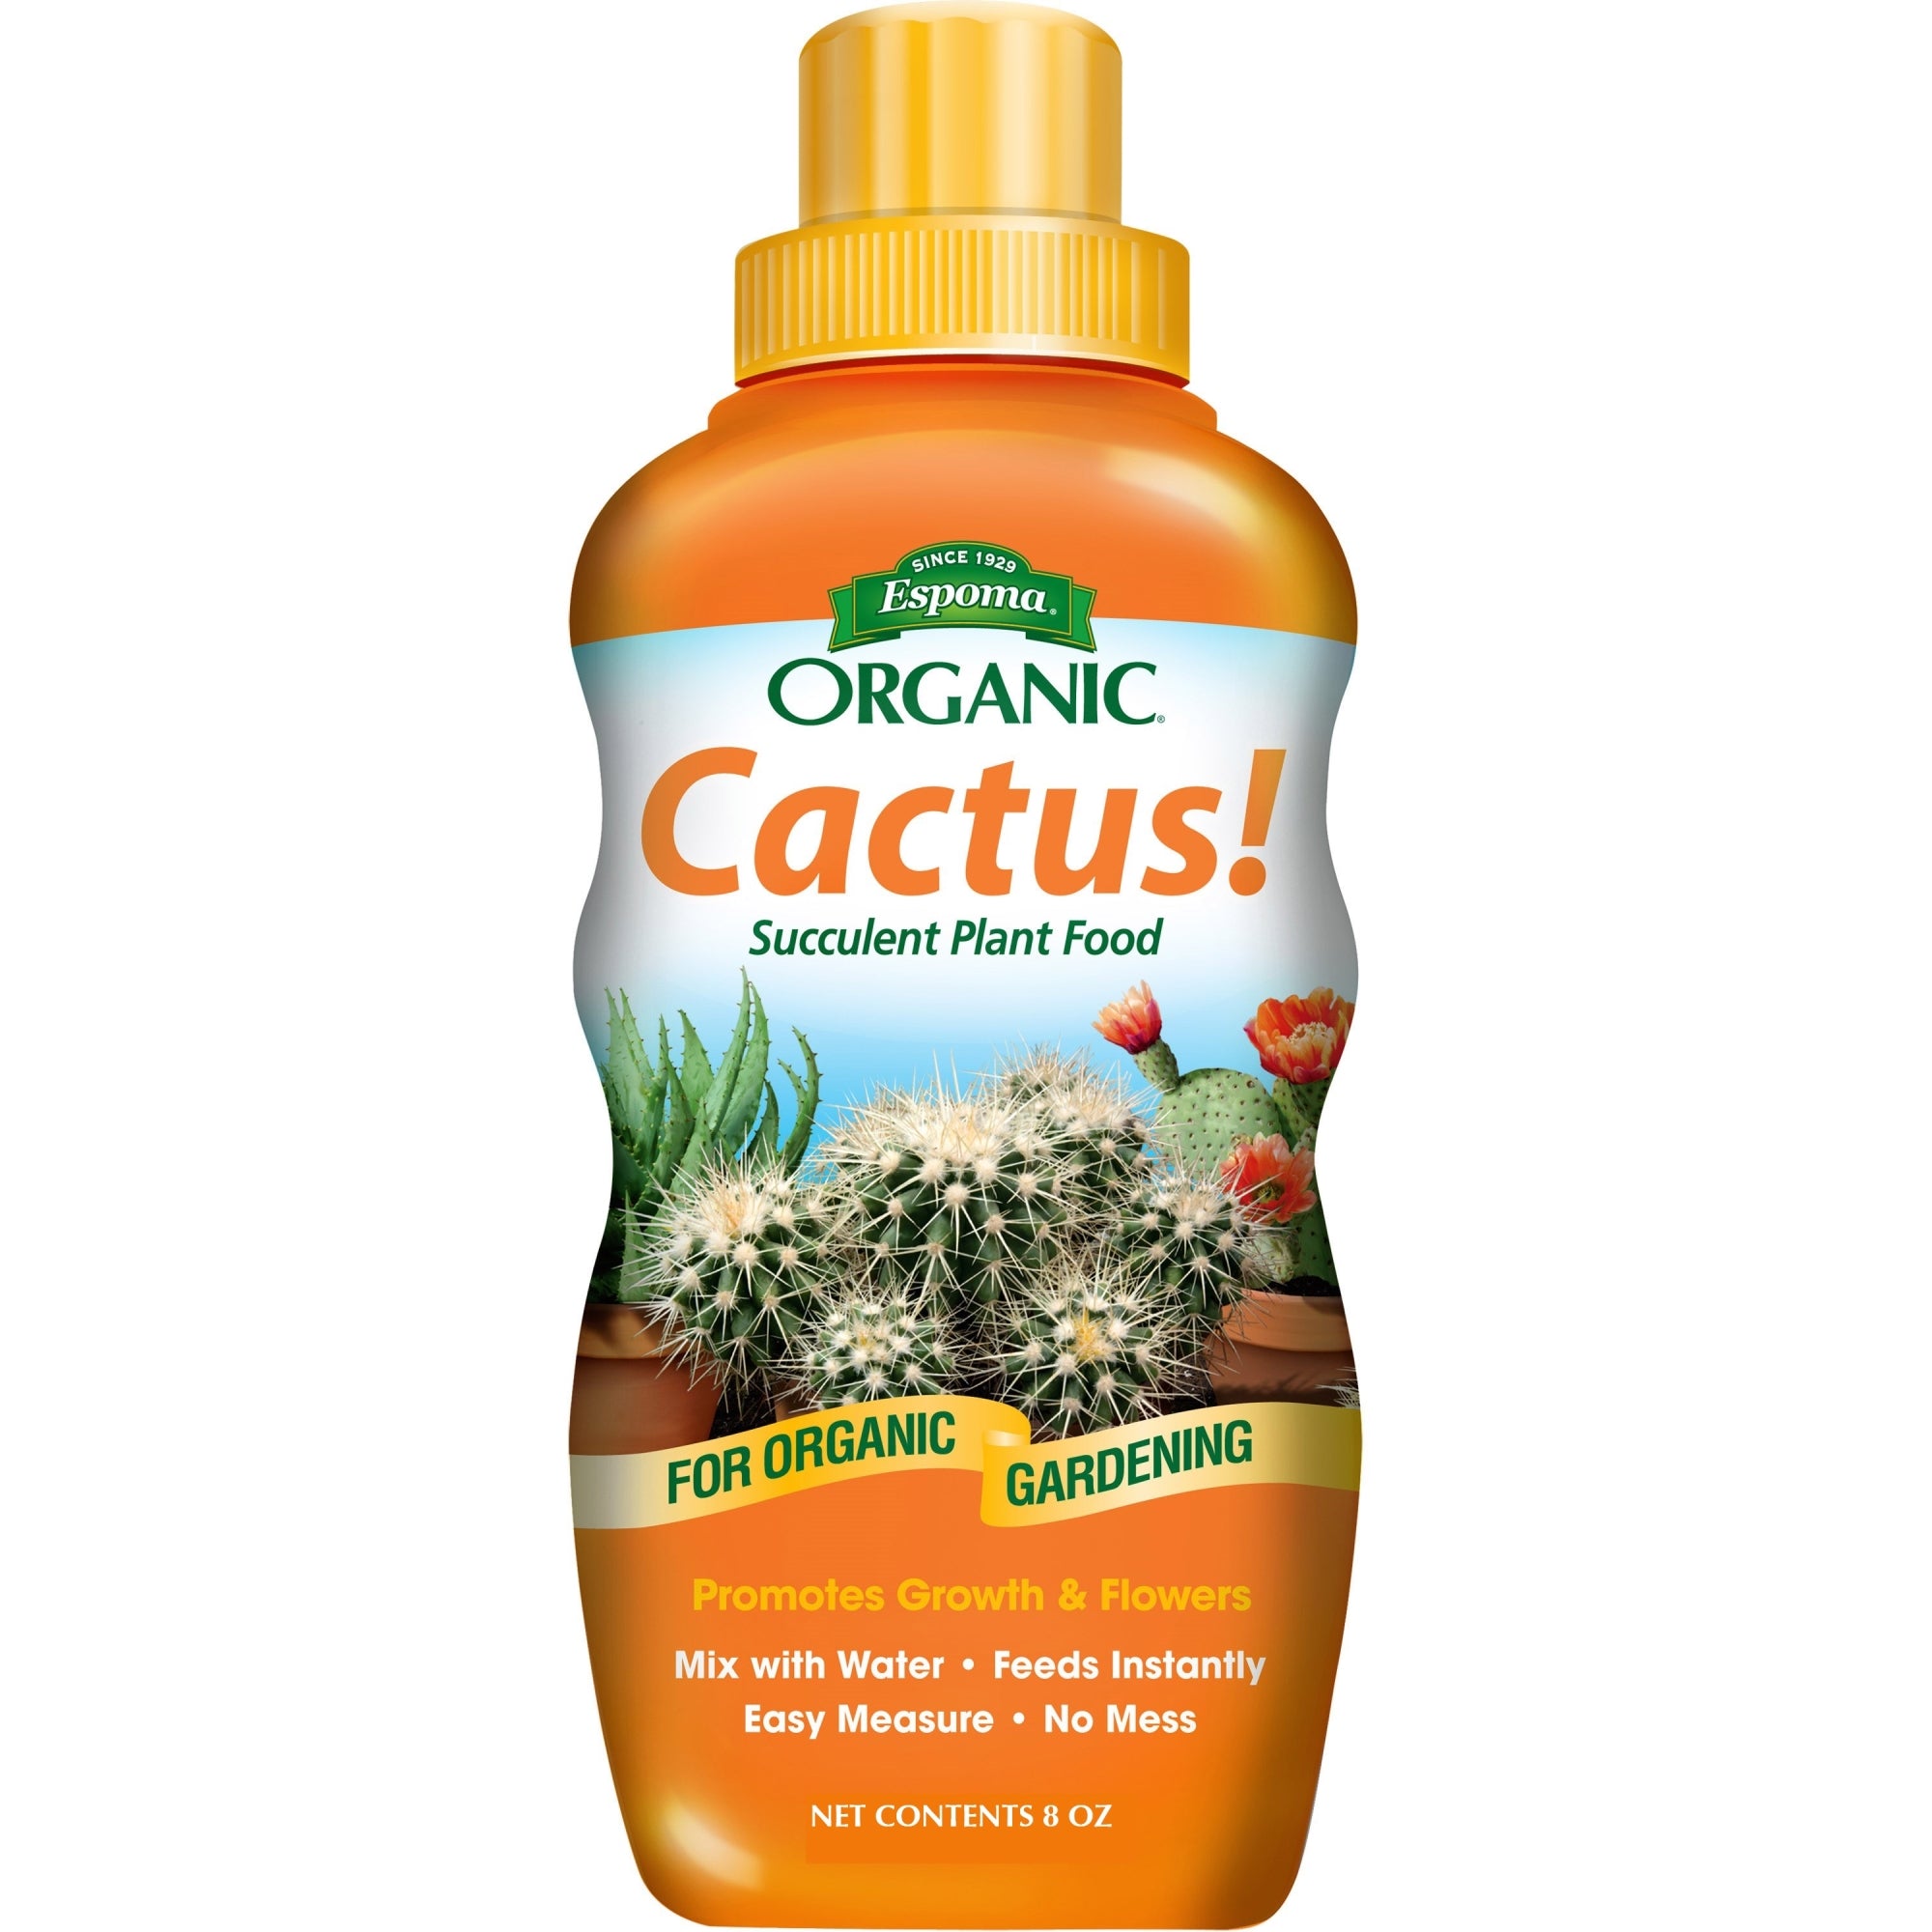 Espoma Organic Cactus! Natural & Organic Liquid Plant Food for all Cactus, Succulents, Palm, and Citrus, Both Indoors and Outdoors, 8 fl oz